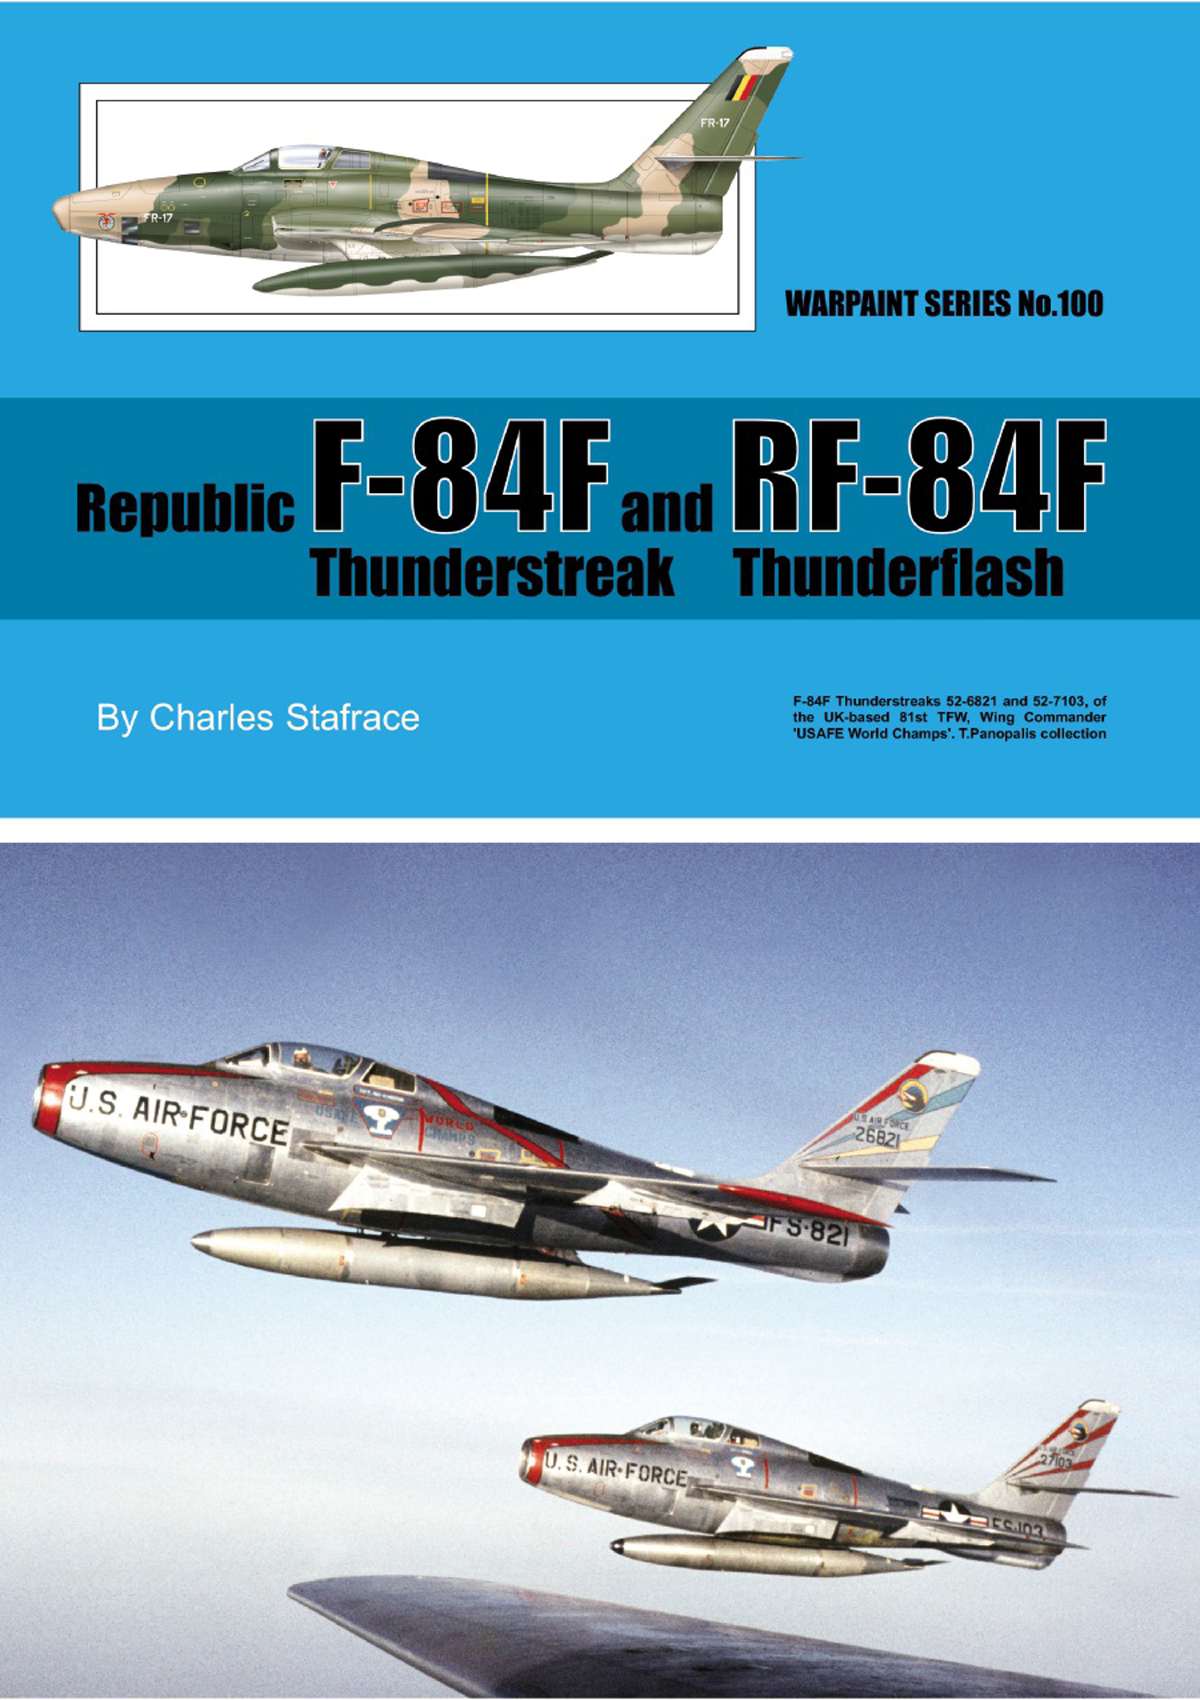 N100 - Republic F-84F Thunderstreak and RF-84F Thunderflash